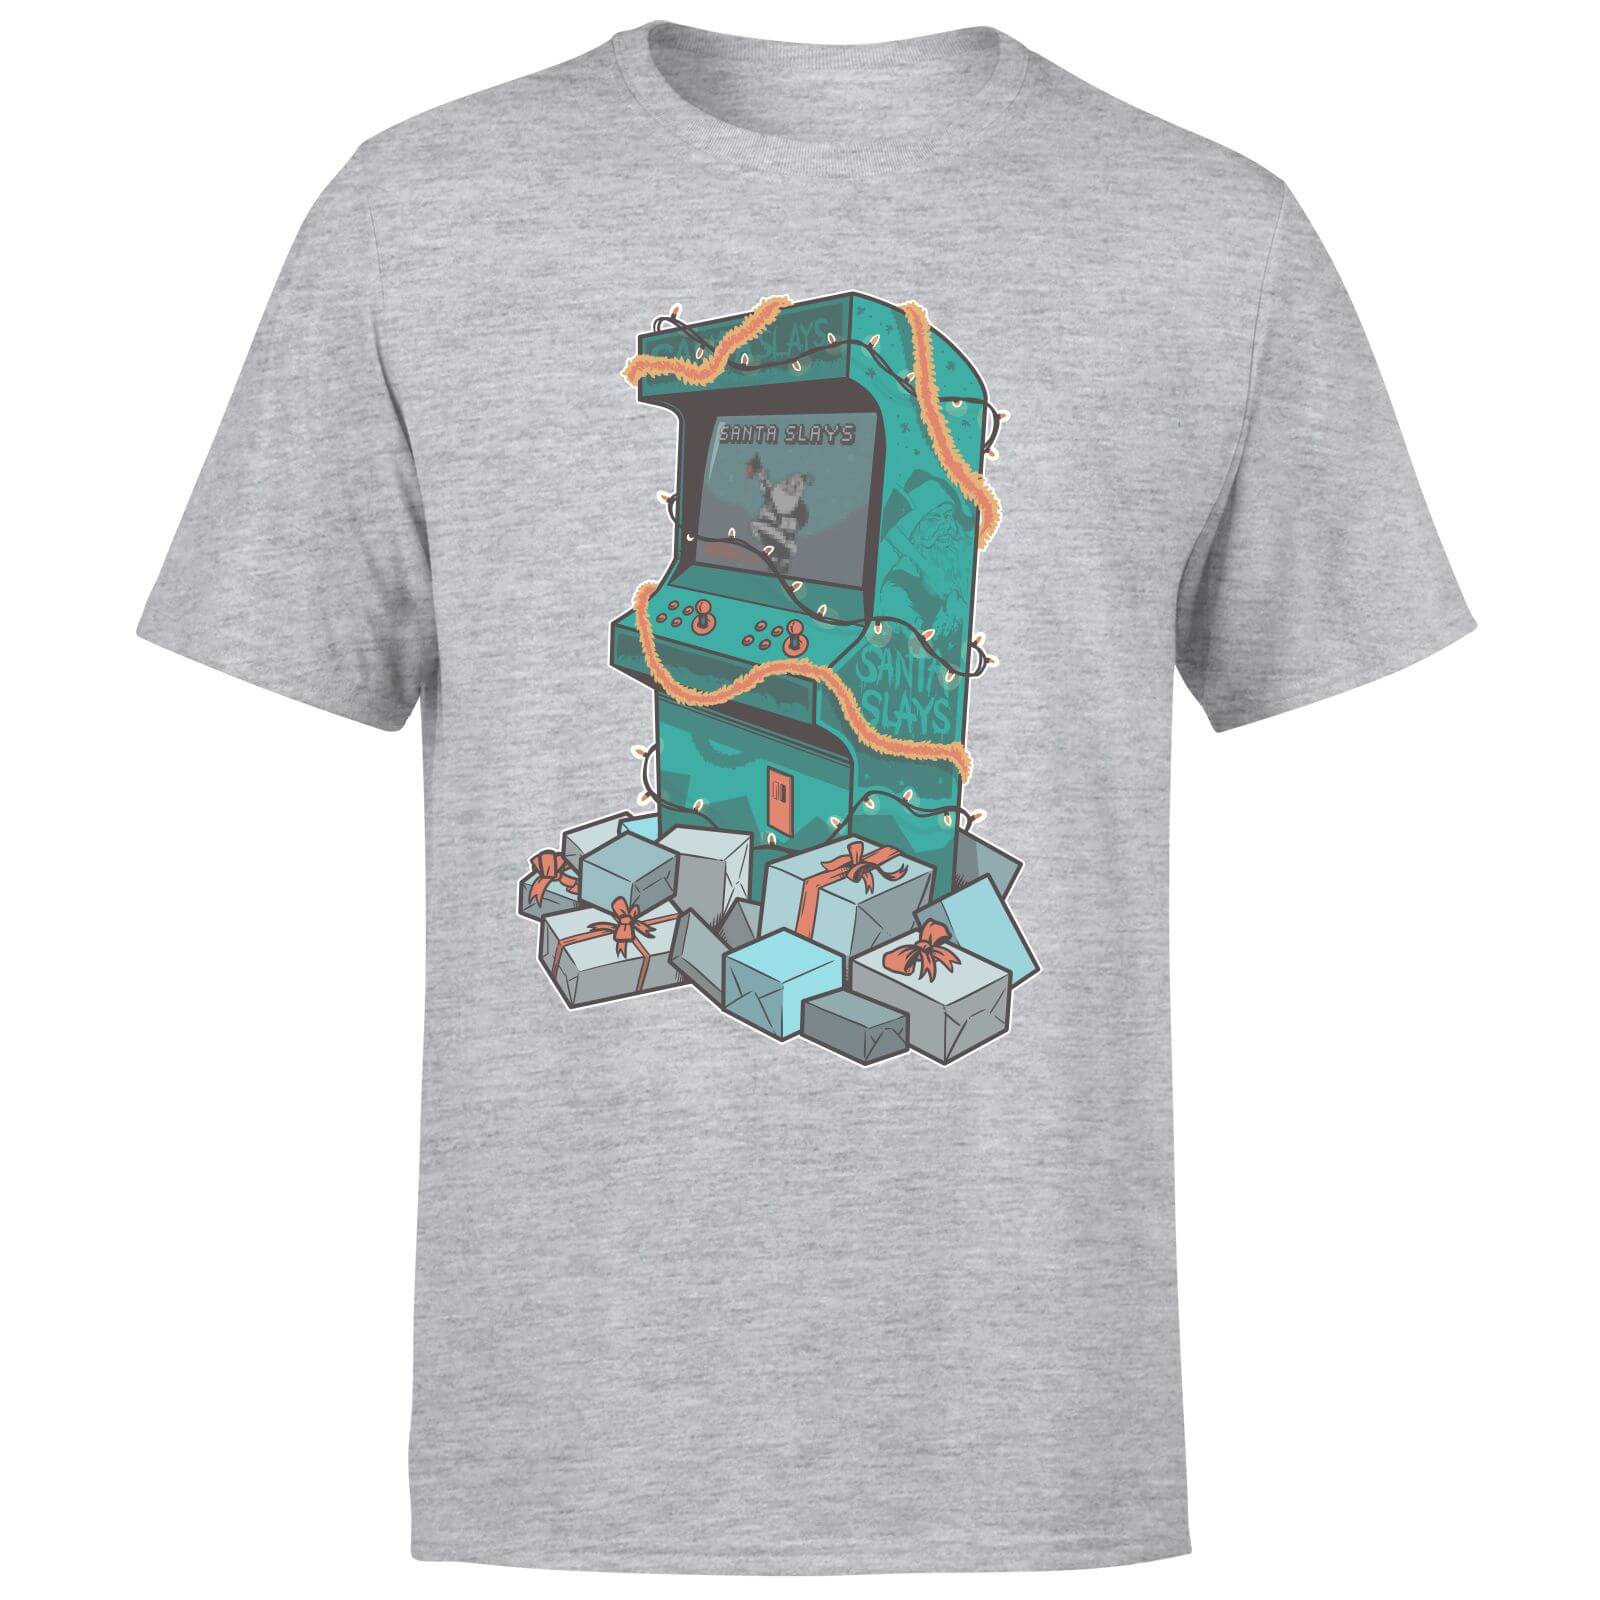 Arcade Tress T-Shirt - Grey - S - Grey